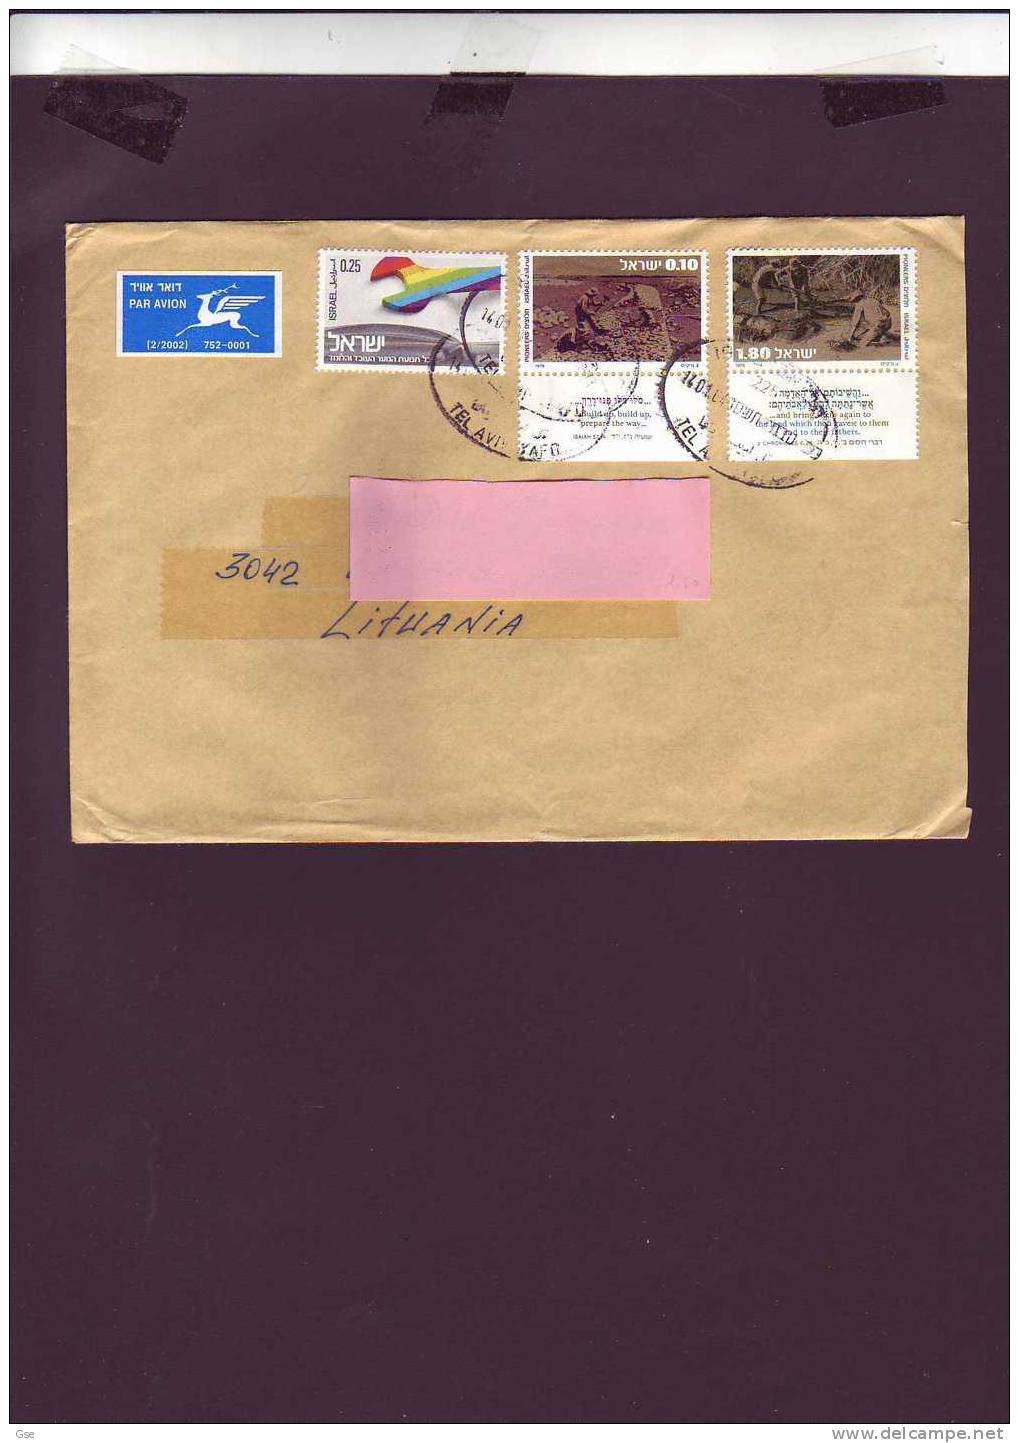 ISRAELE  2004 - Raccomandata  Per La Lituania - Covers & Documents